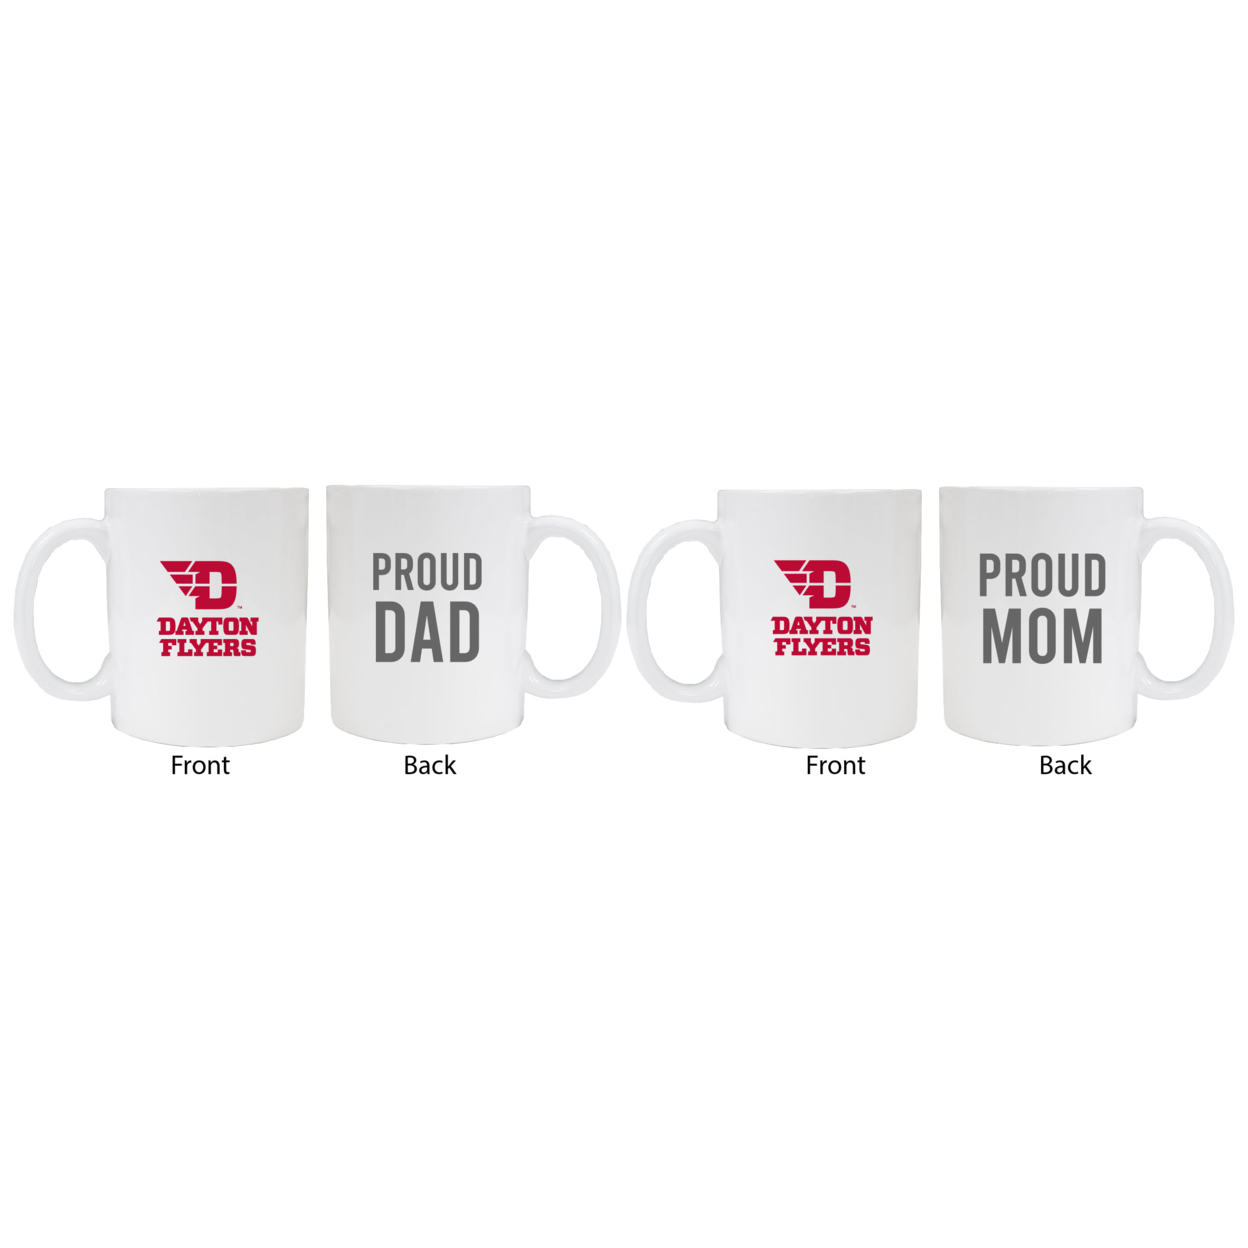 Dayton Flyers Proud Mom And Dad White Ceramic Coffee Mug 2 Pack (White).